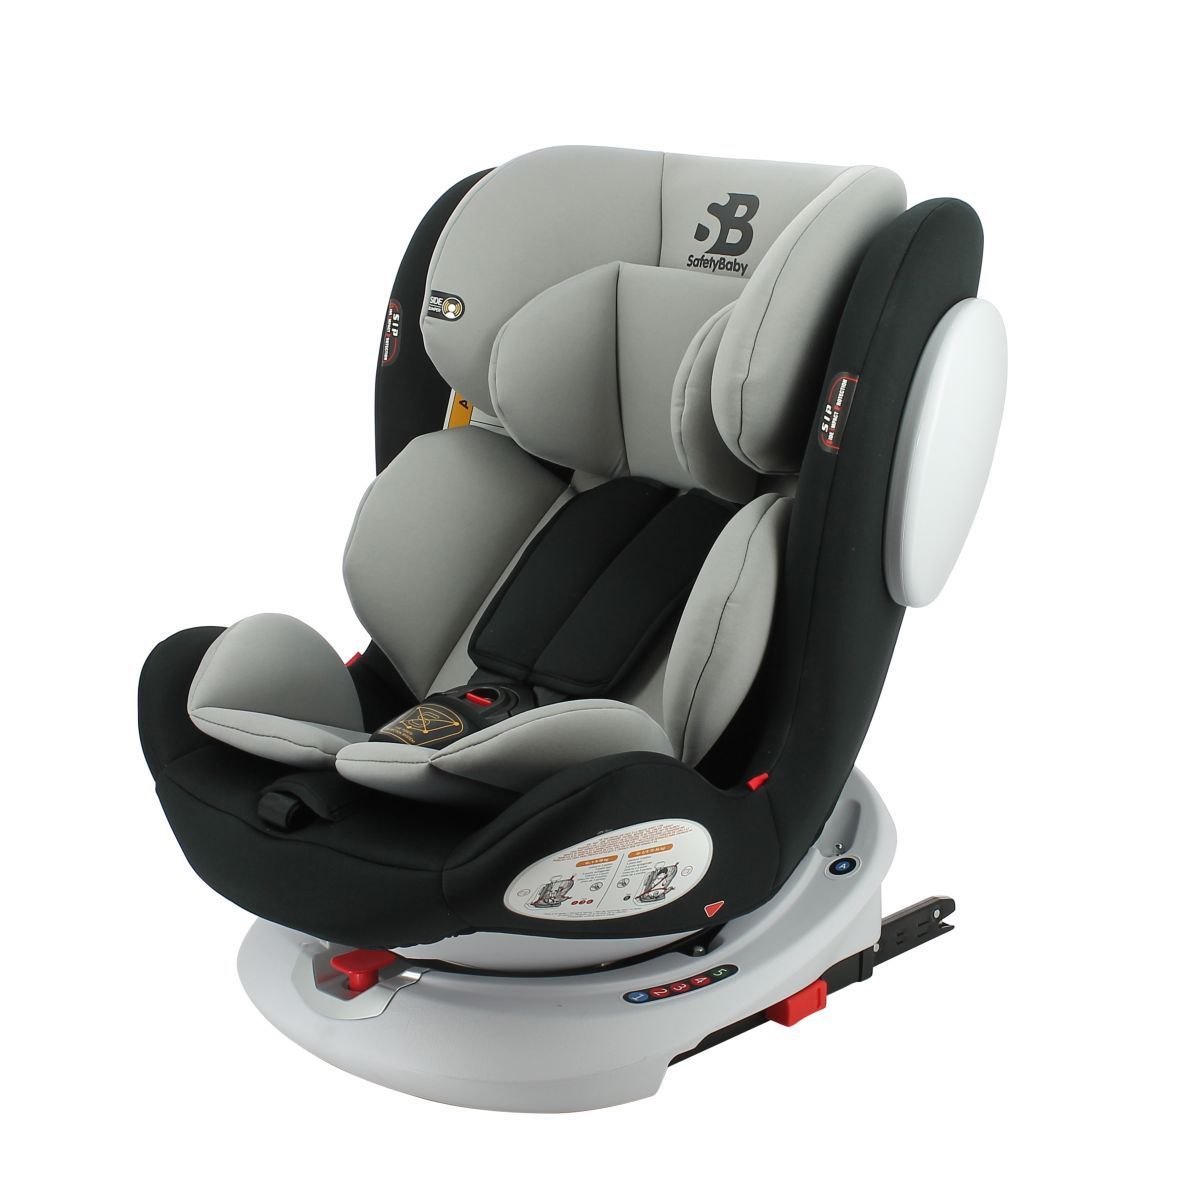 SIÈGE-AUTO SEATY SAFETY BABY